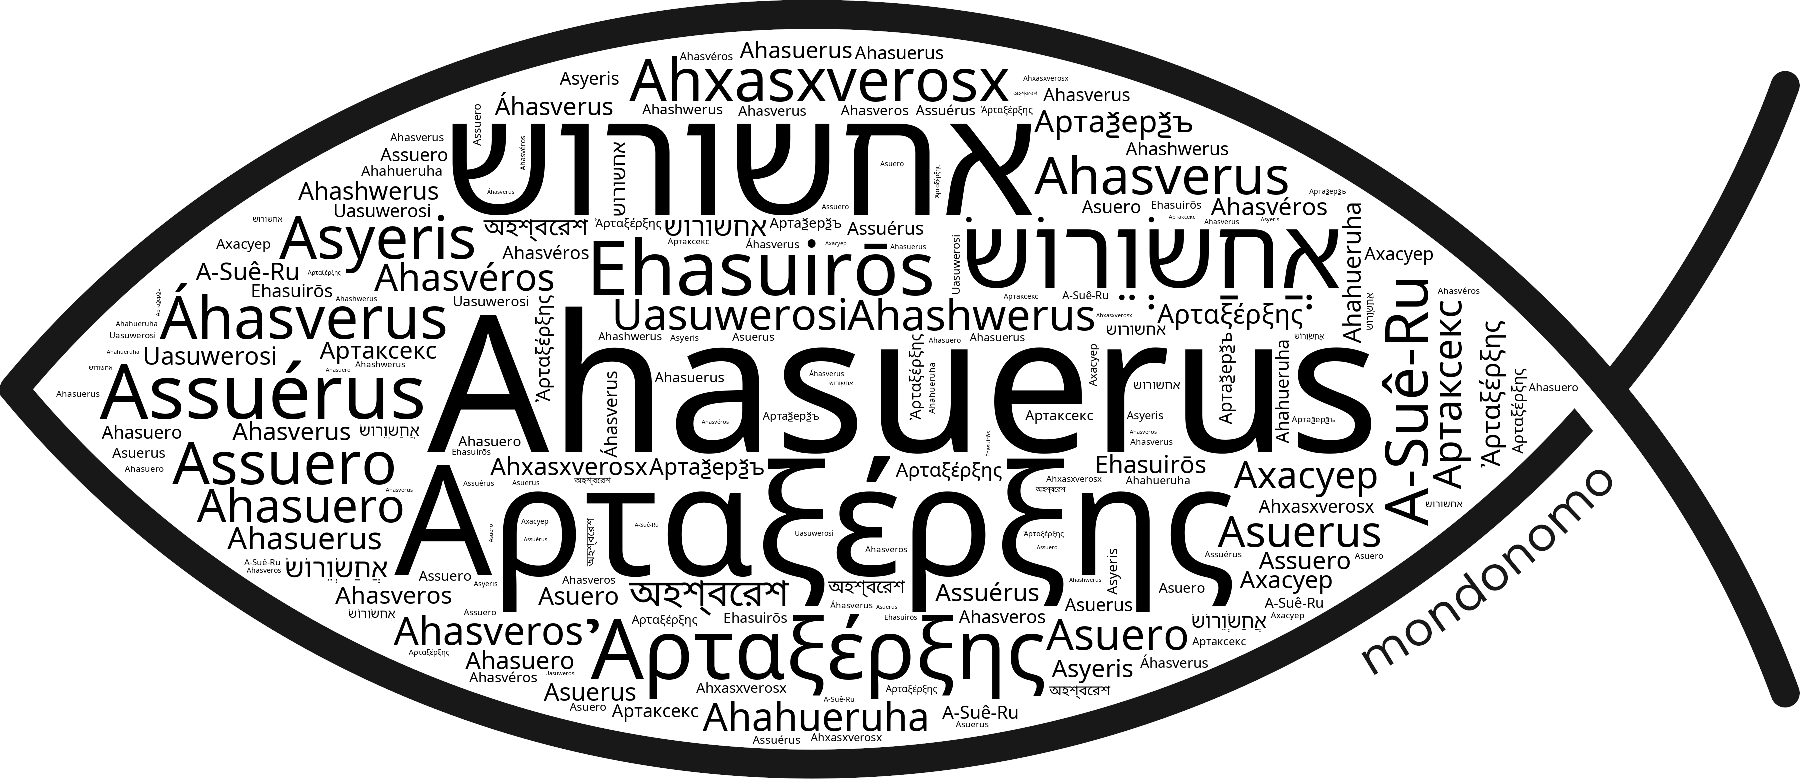 Name Ahasuerus in the world's Bibles